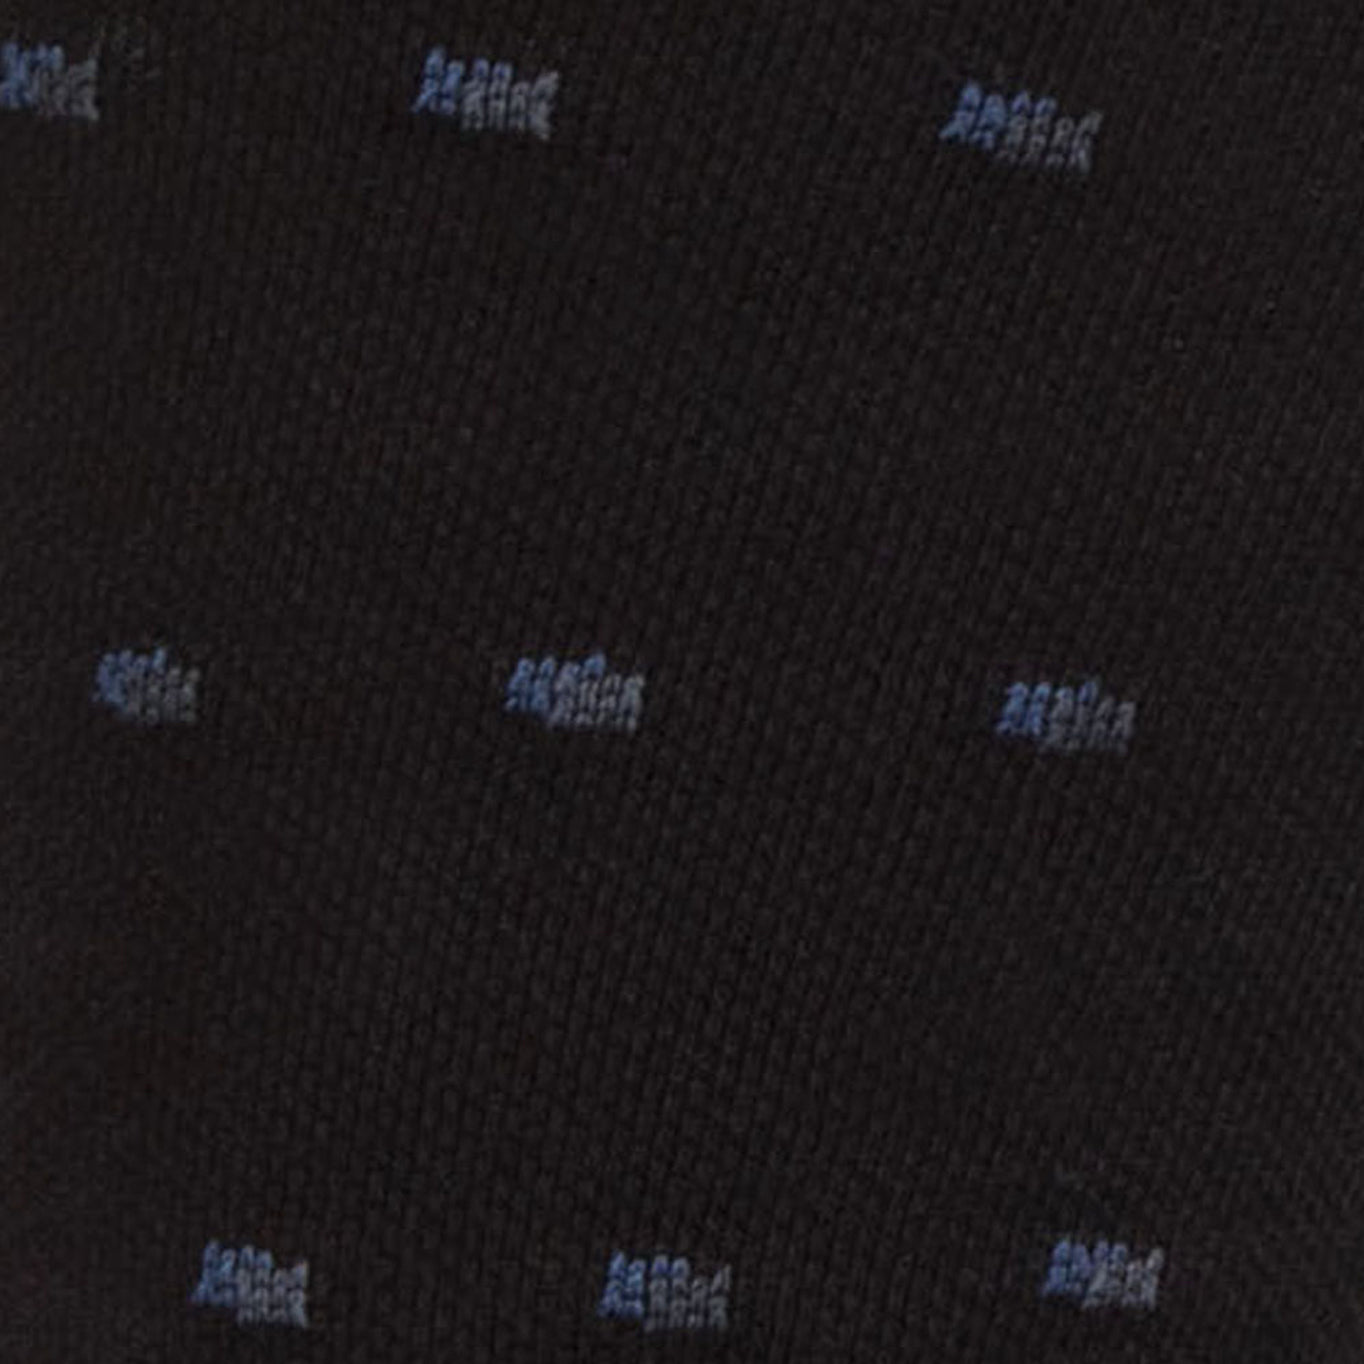 1 Pair Mens IOMI FootNurse Jacquard Compression Travel & Flight Socks - Black With Blue/Charcoal Squares